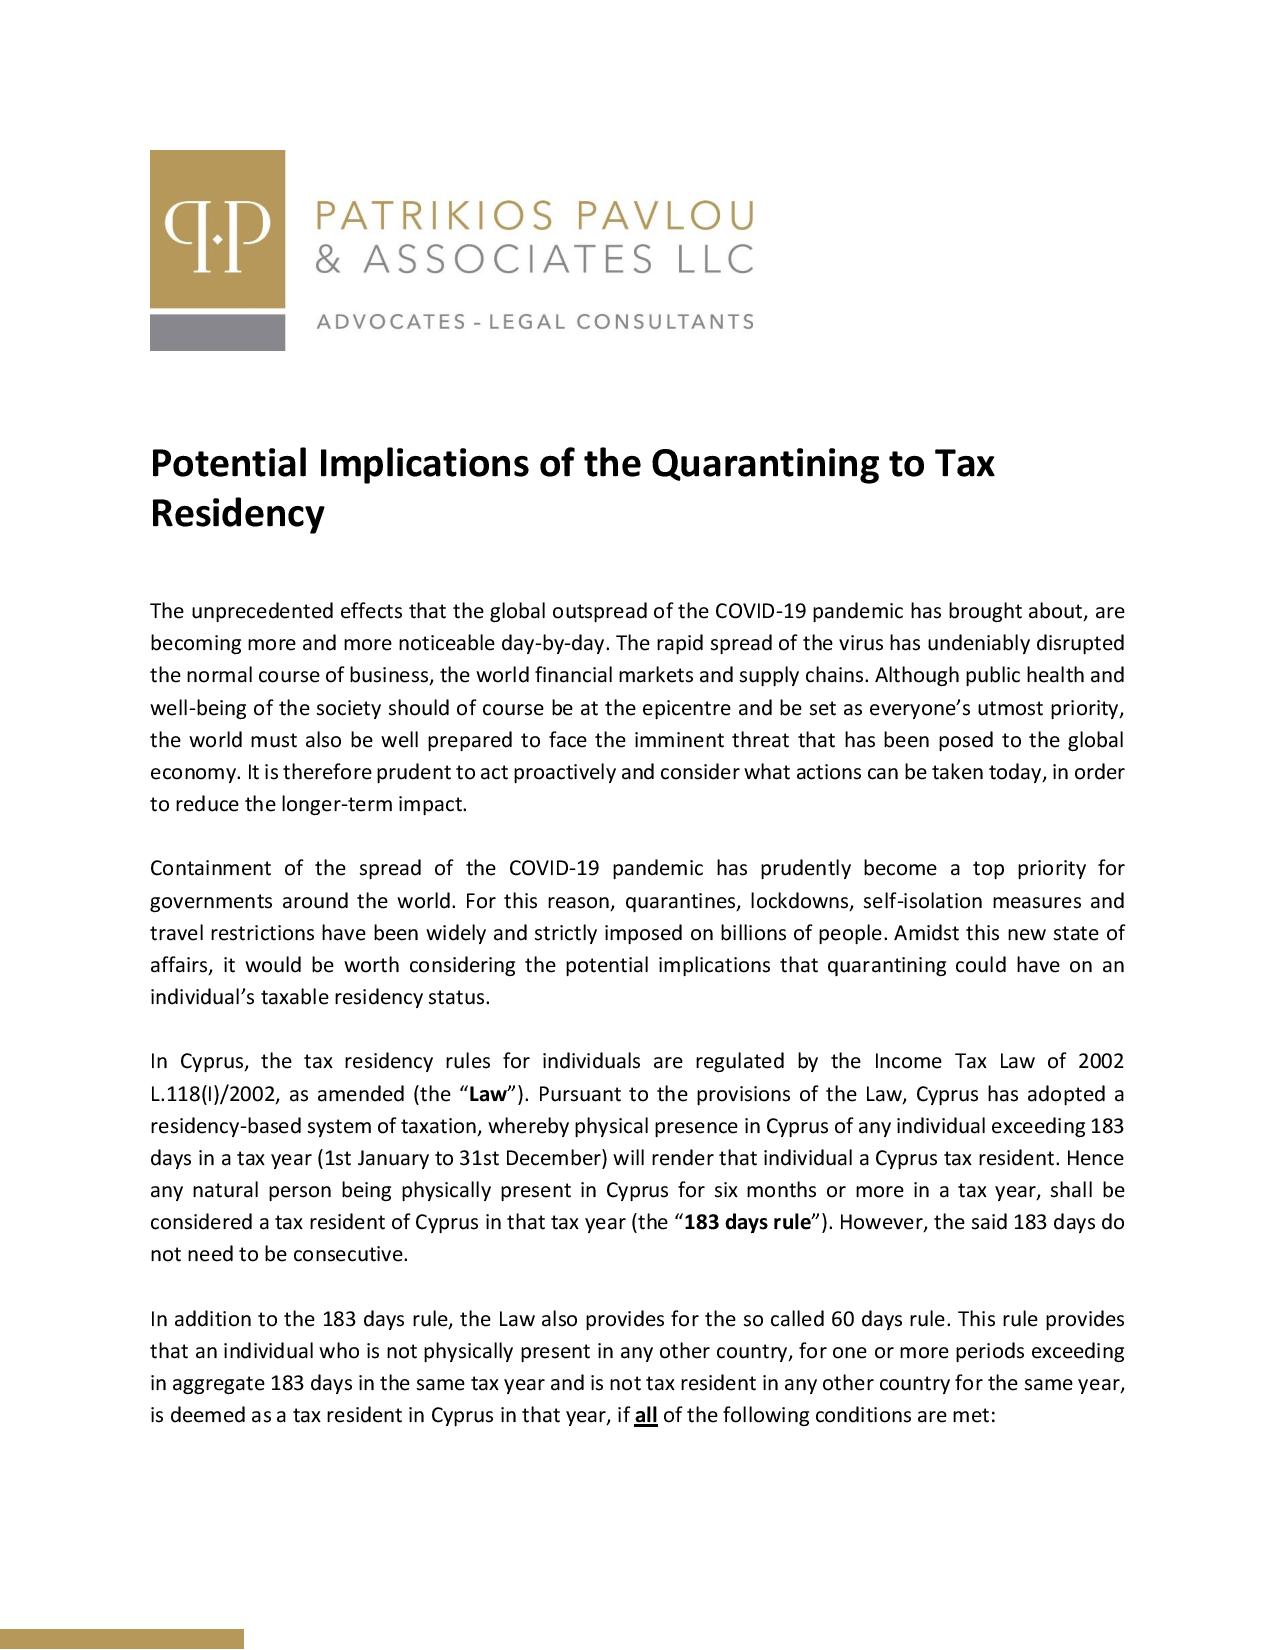 Patrikios Pavlou & Associates LLC: Potential Implications of the Quarantining to Tax Residency